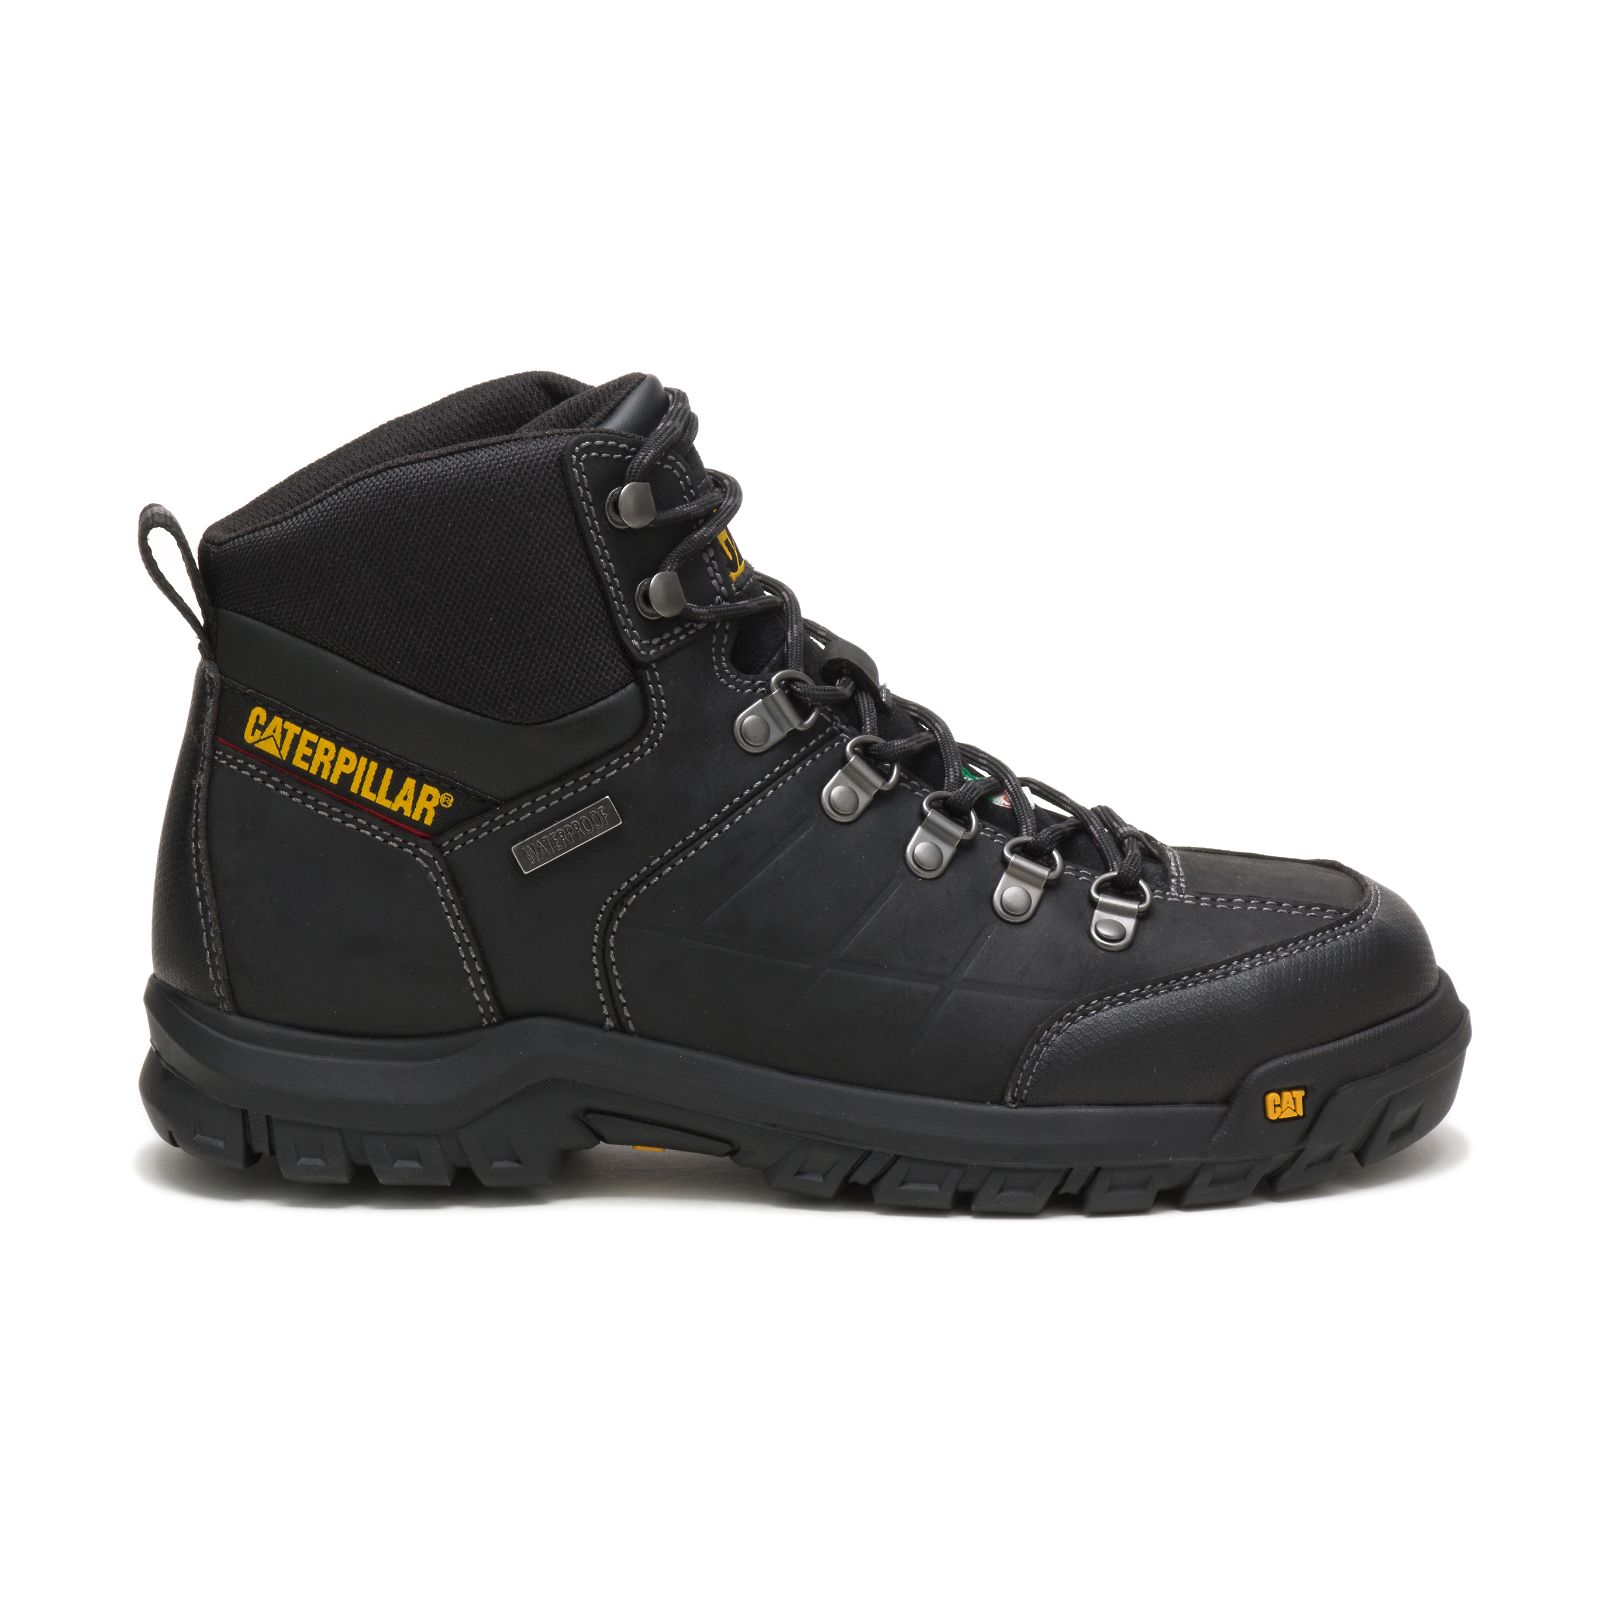 Men's Caterpillar Threshold Waterproof Steel Toe Csa Work Boots Black | Cat-854103